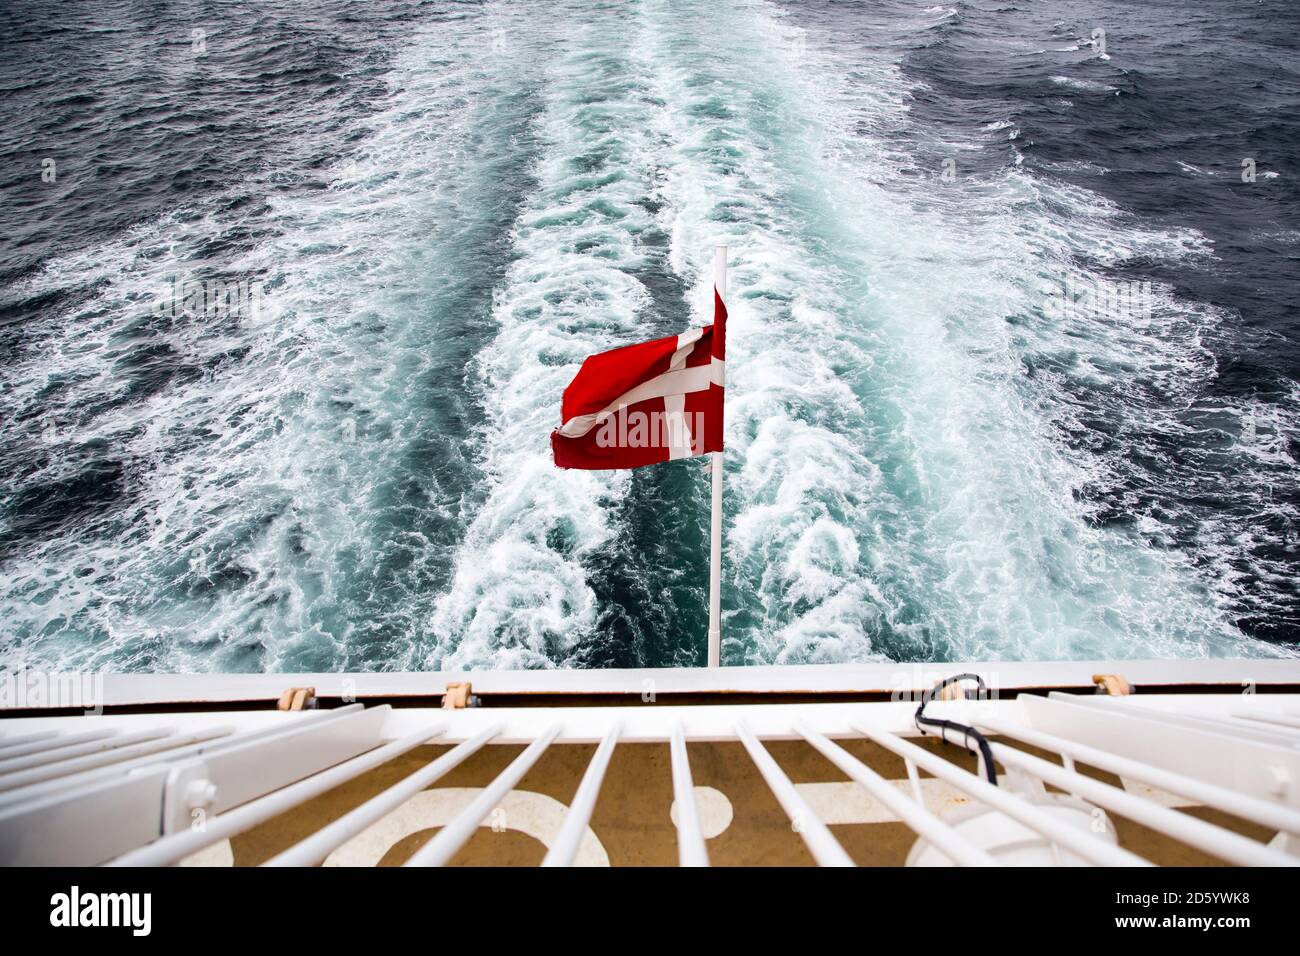 Denmark, Danish flag on ferry on the sea Stock Photo